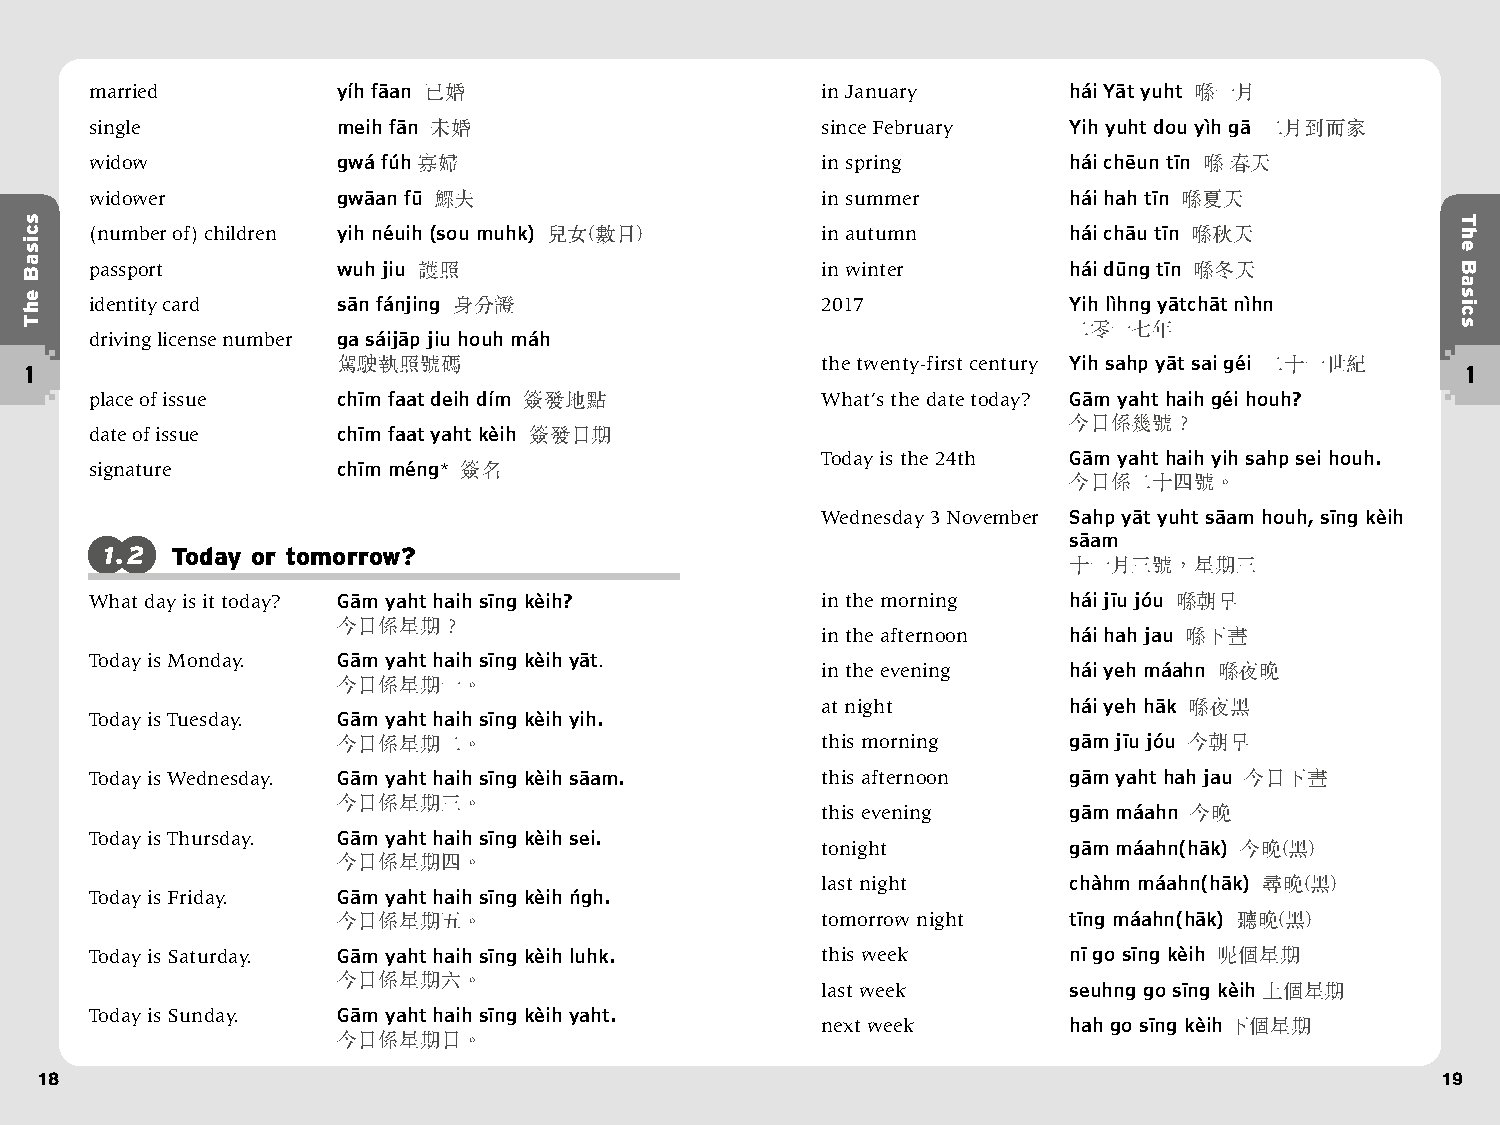 Essential Cantonese Phrasebook & Dictionary